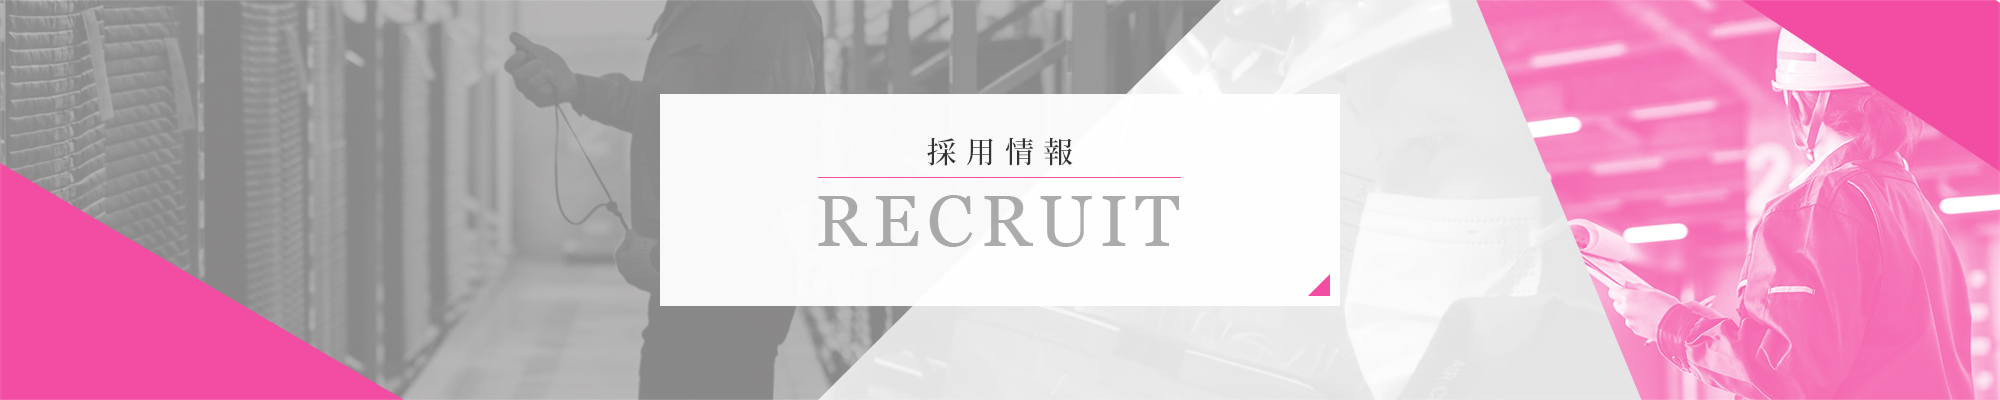 banner_recruit_def